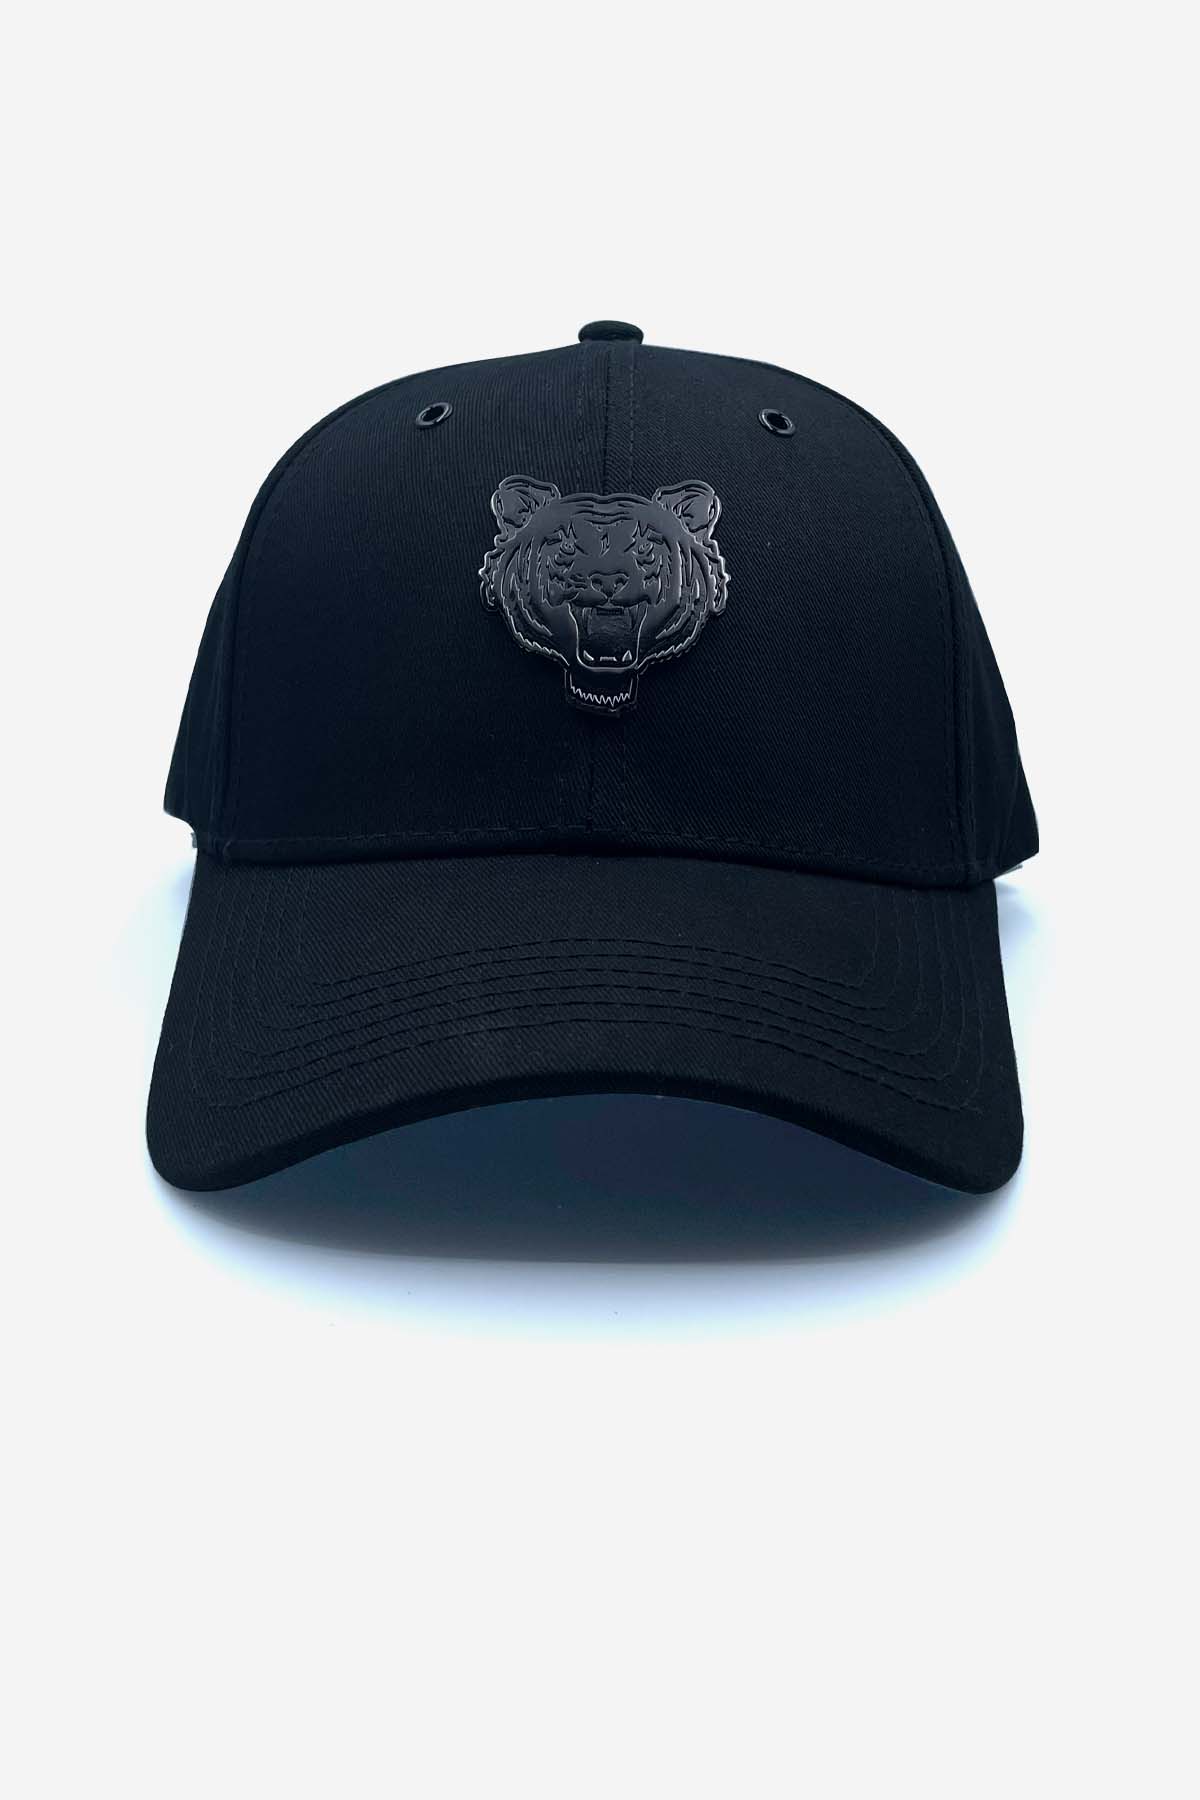 BLACK TIGER CAP WITH BLACK LOGO